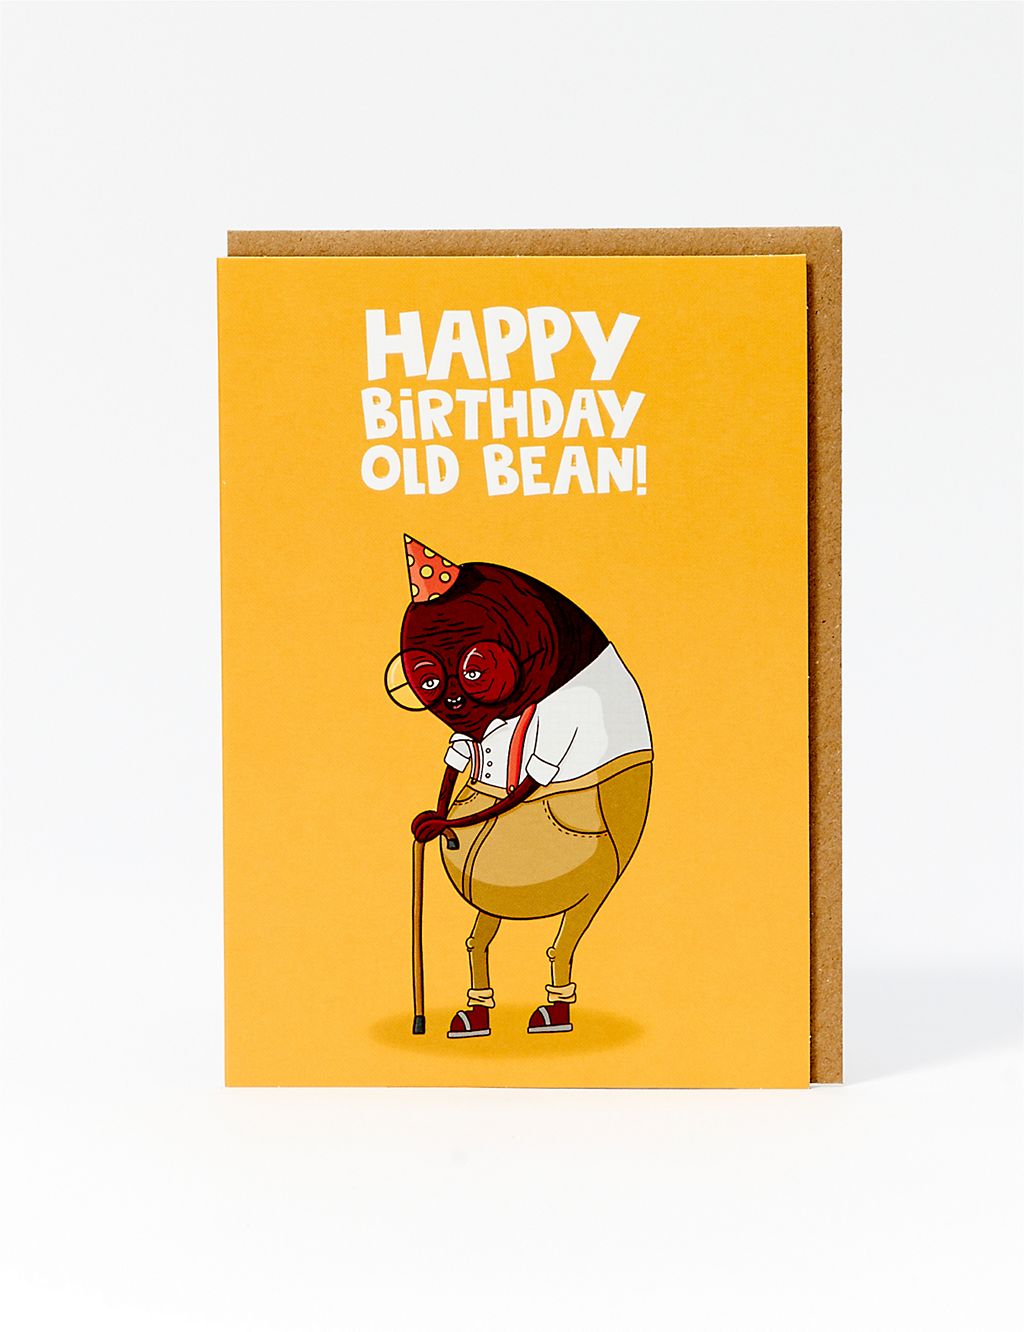 Old Bean Birthday Card 1 of 2